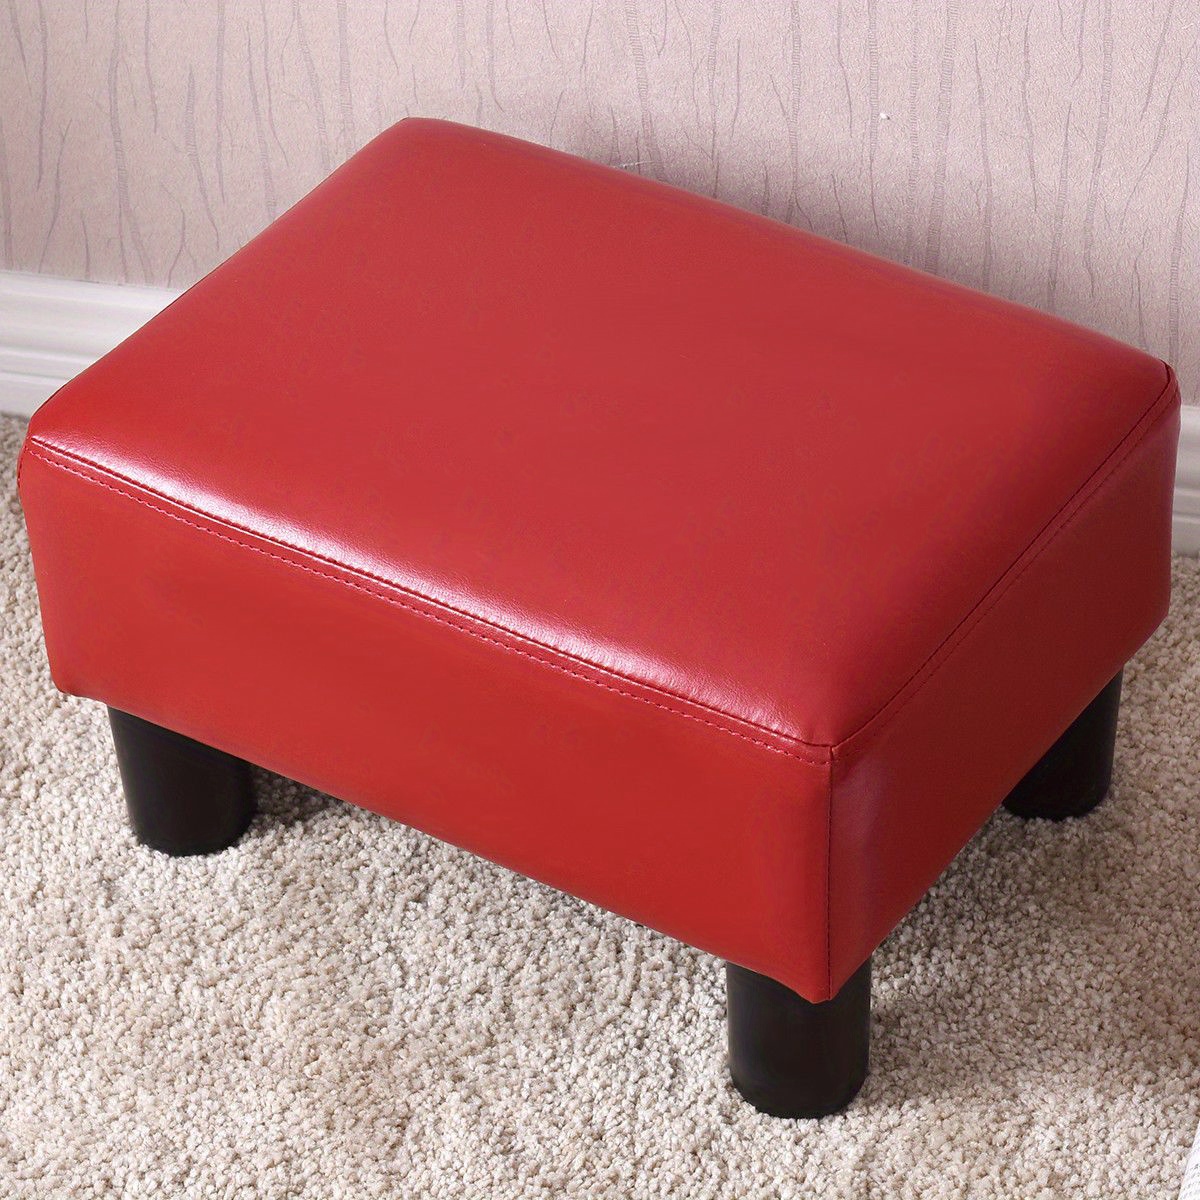 

Goplus Small Ottoman Pu Leather Footrest Modern Footstool Rectangular Seat Stool Red